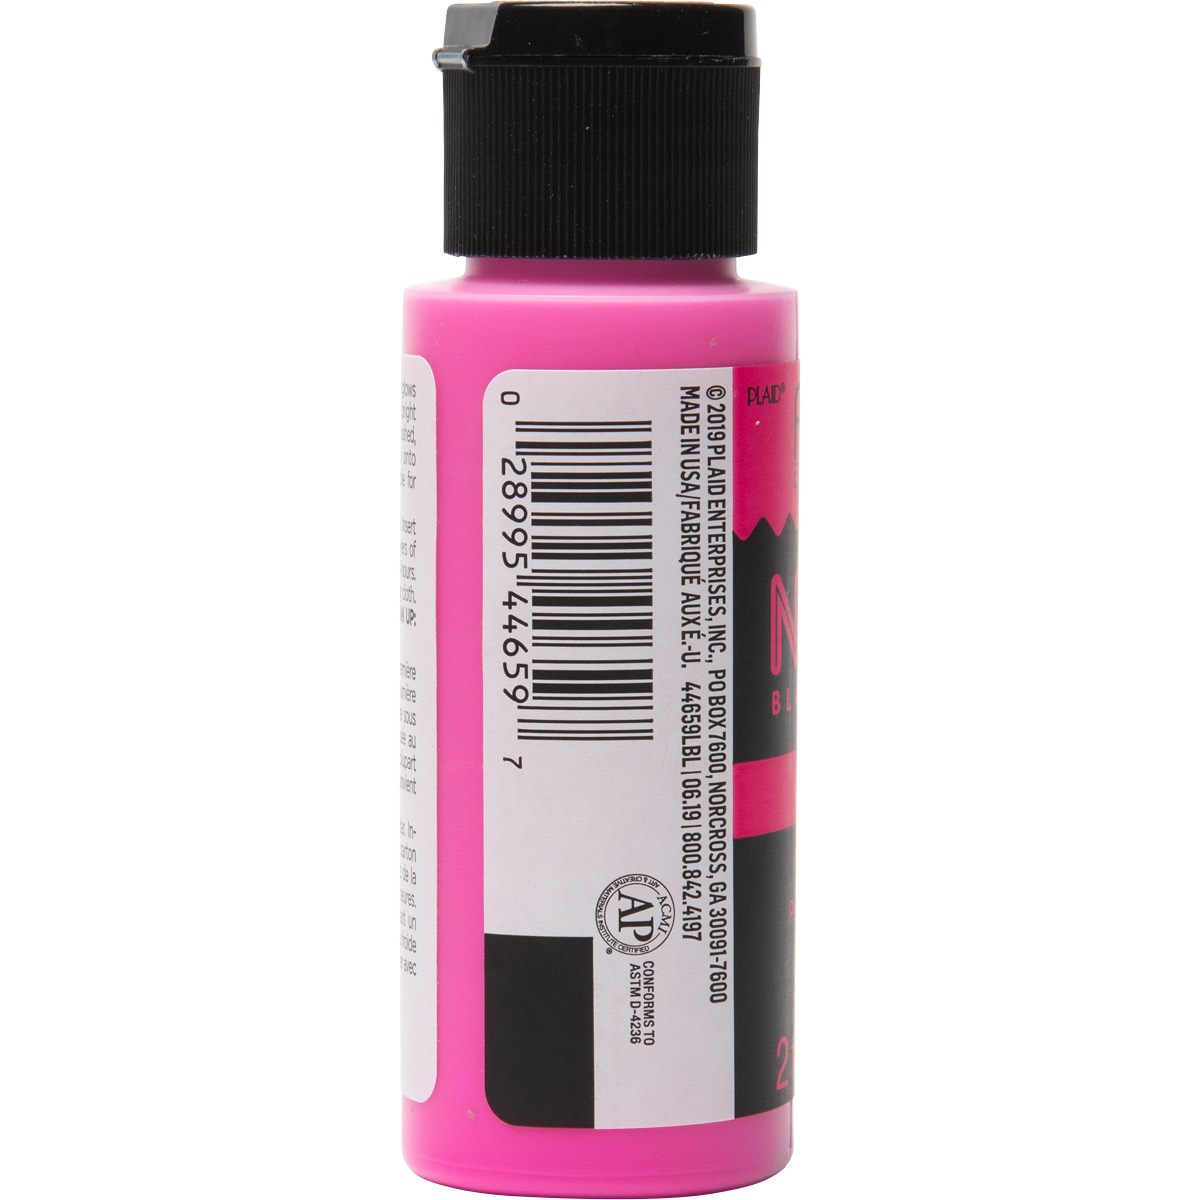 Fabric Creations™ Neon Black Light Fabric Paint - Pink, 2 oz. - 44659